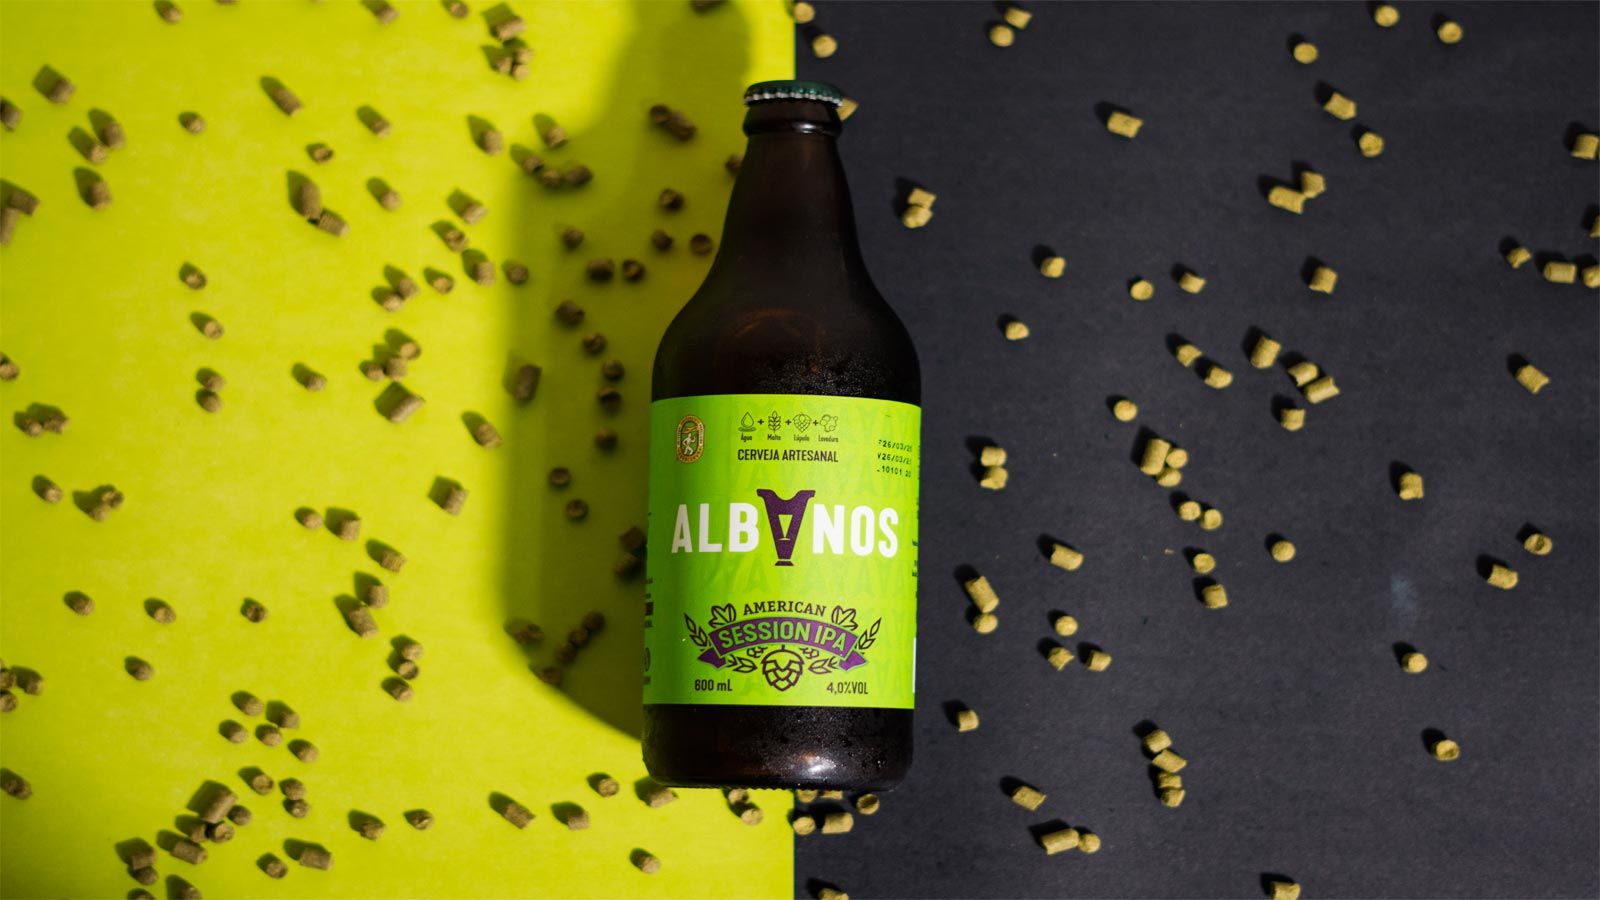 Cervejaria Albanos - Cerveja Artesanal - Delivery de Cerveja - Entrega de Cerveja